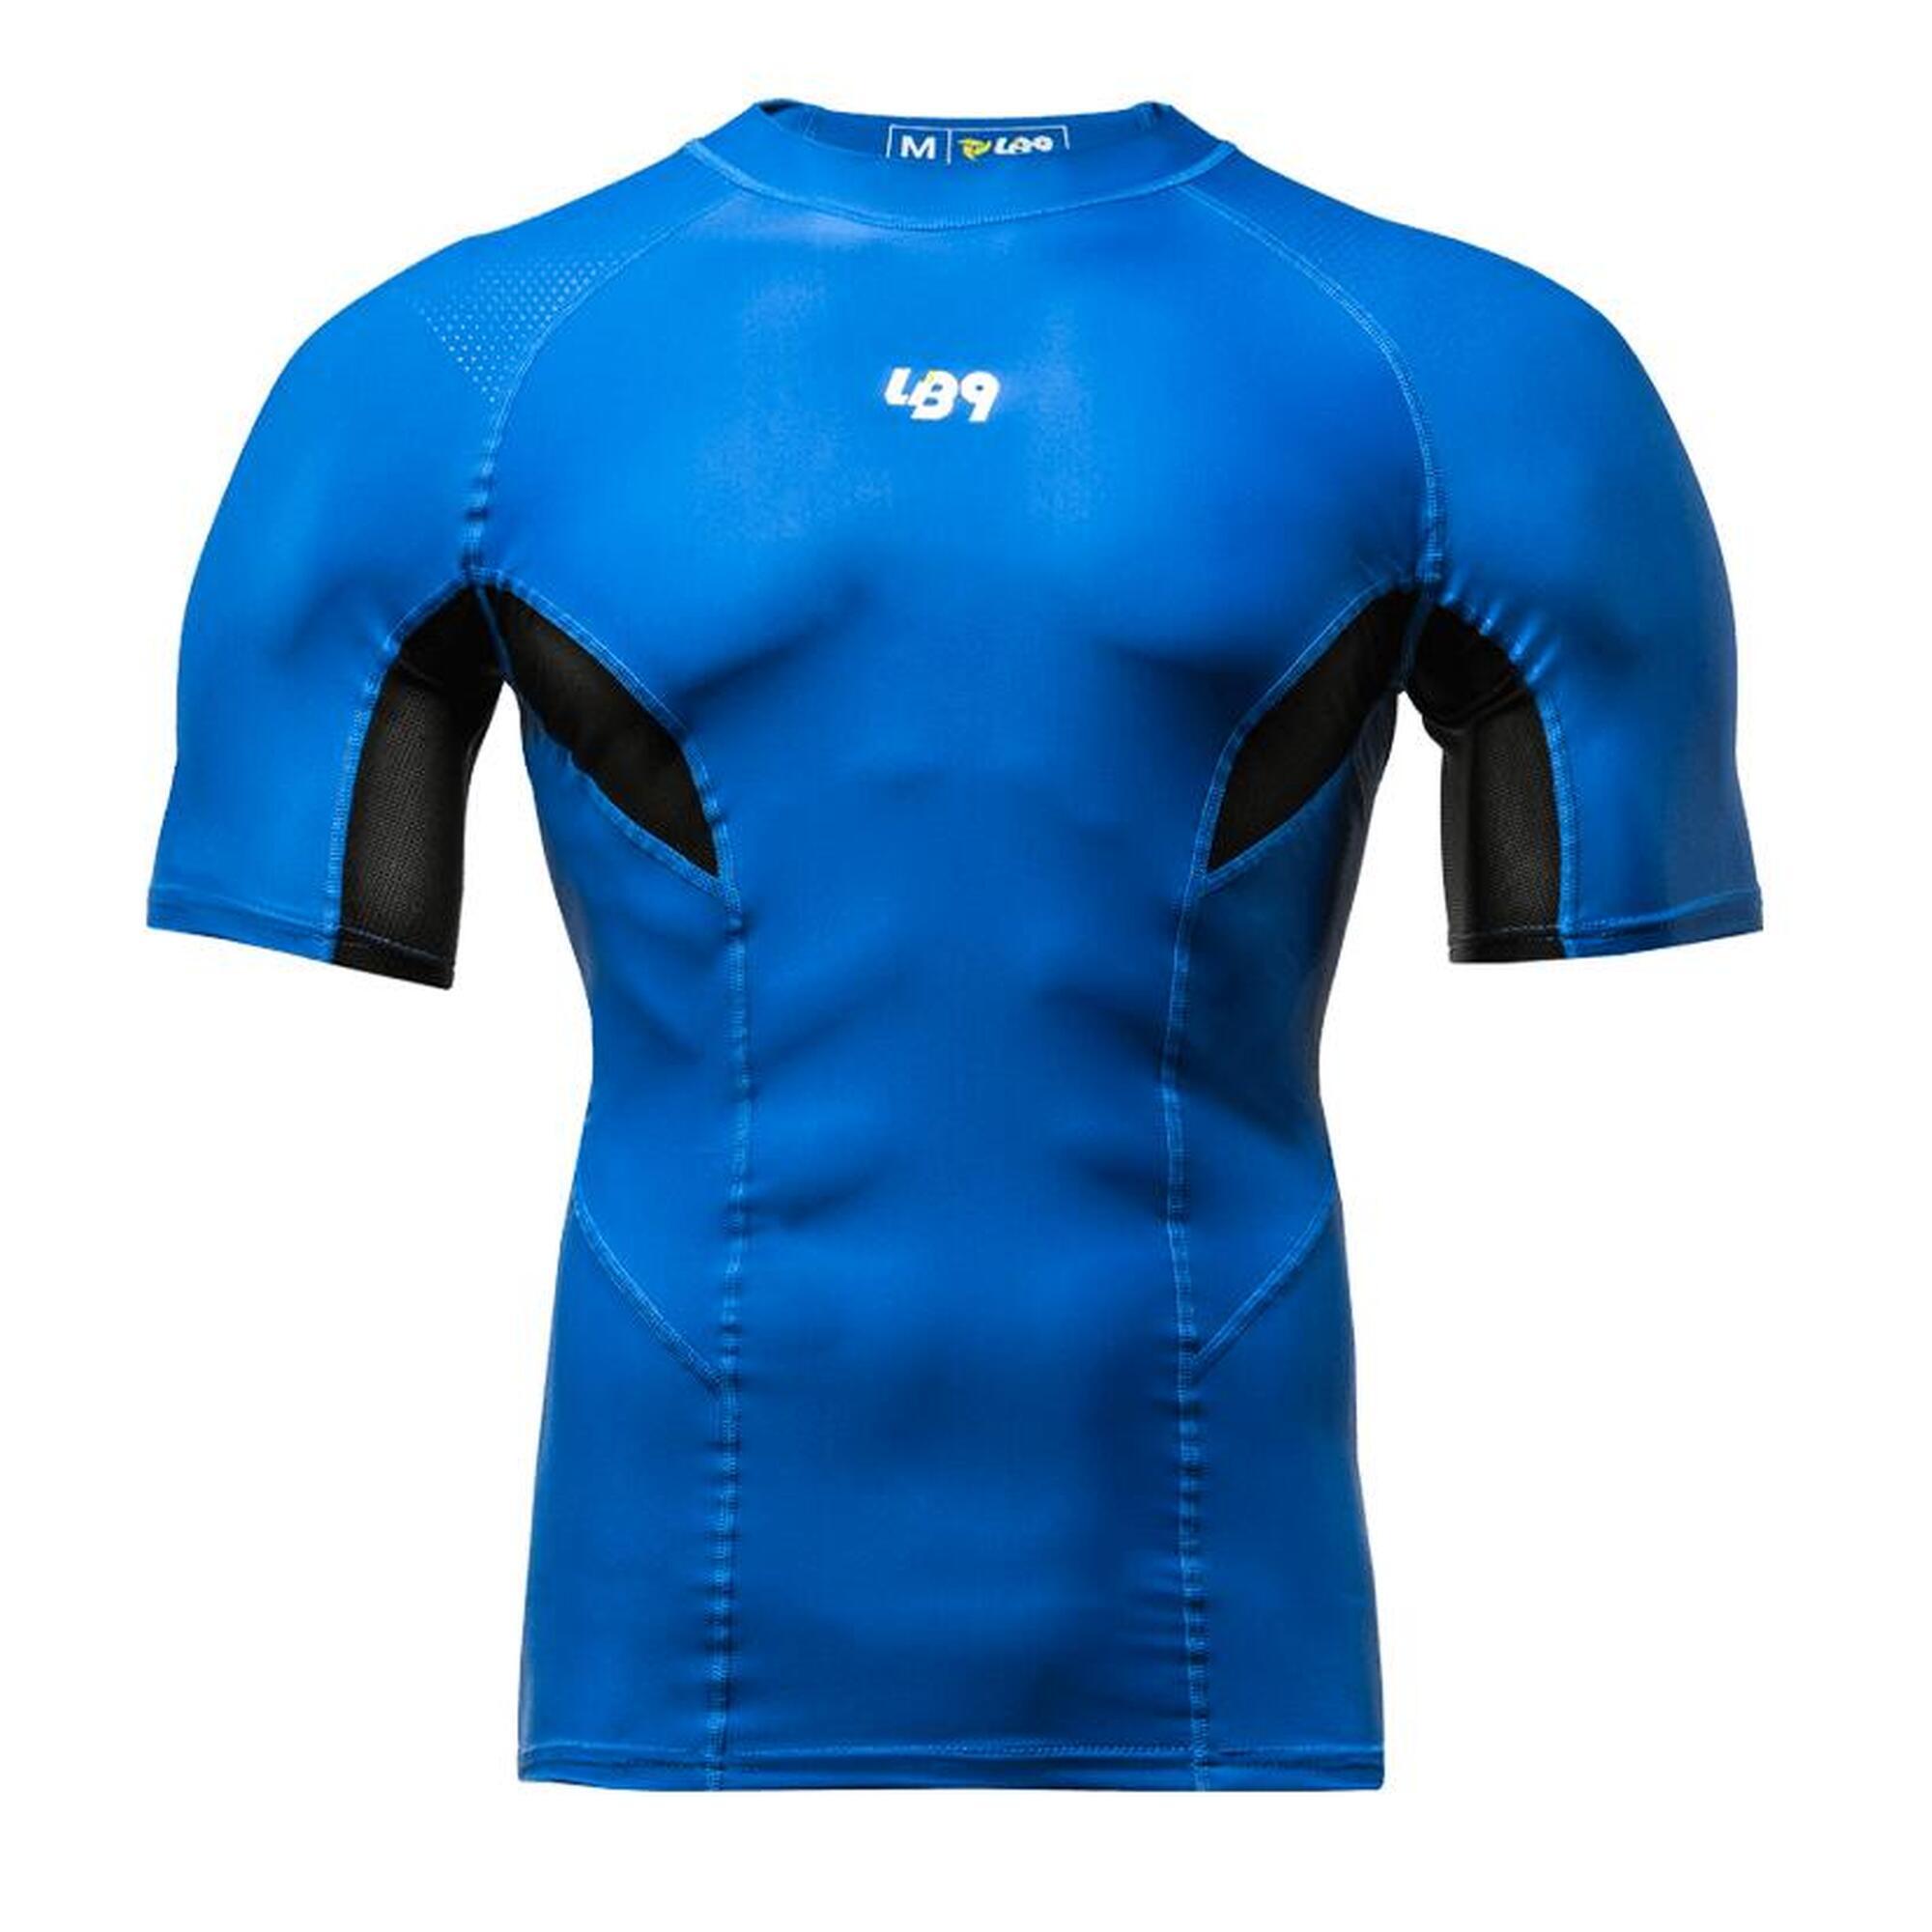 Camiseta Rashguard de Compresión Anti-UV para Piragüismo, Kayak y SUP - Azul